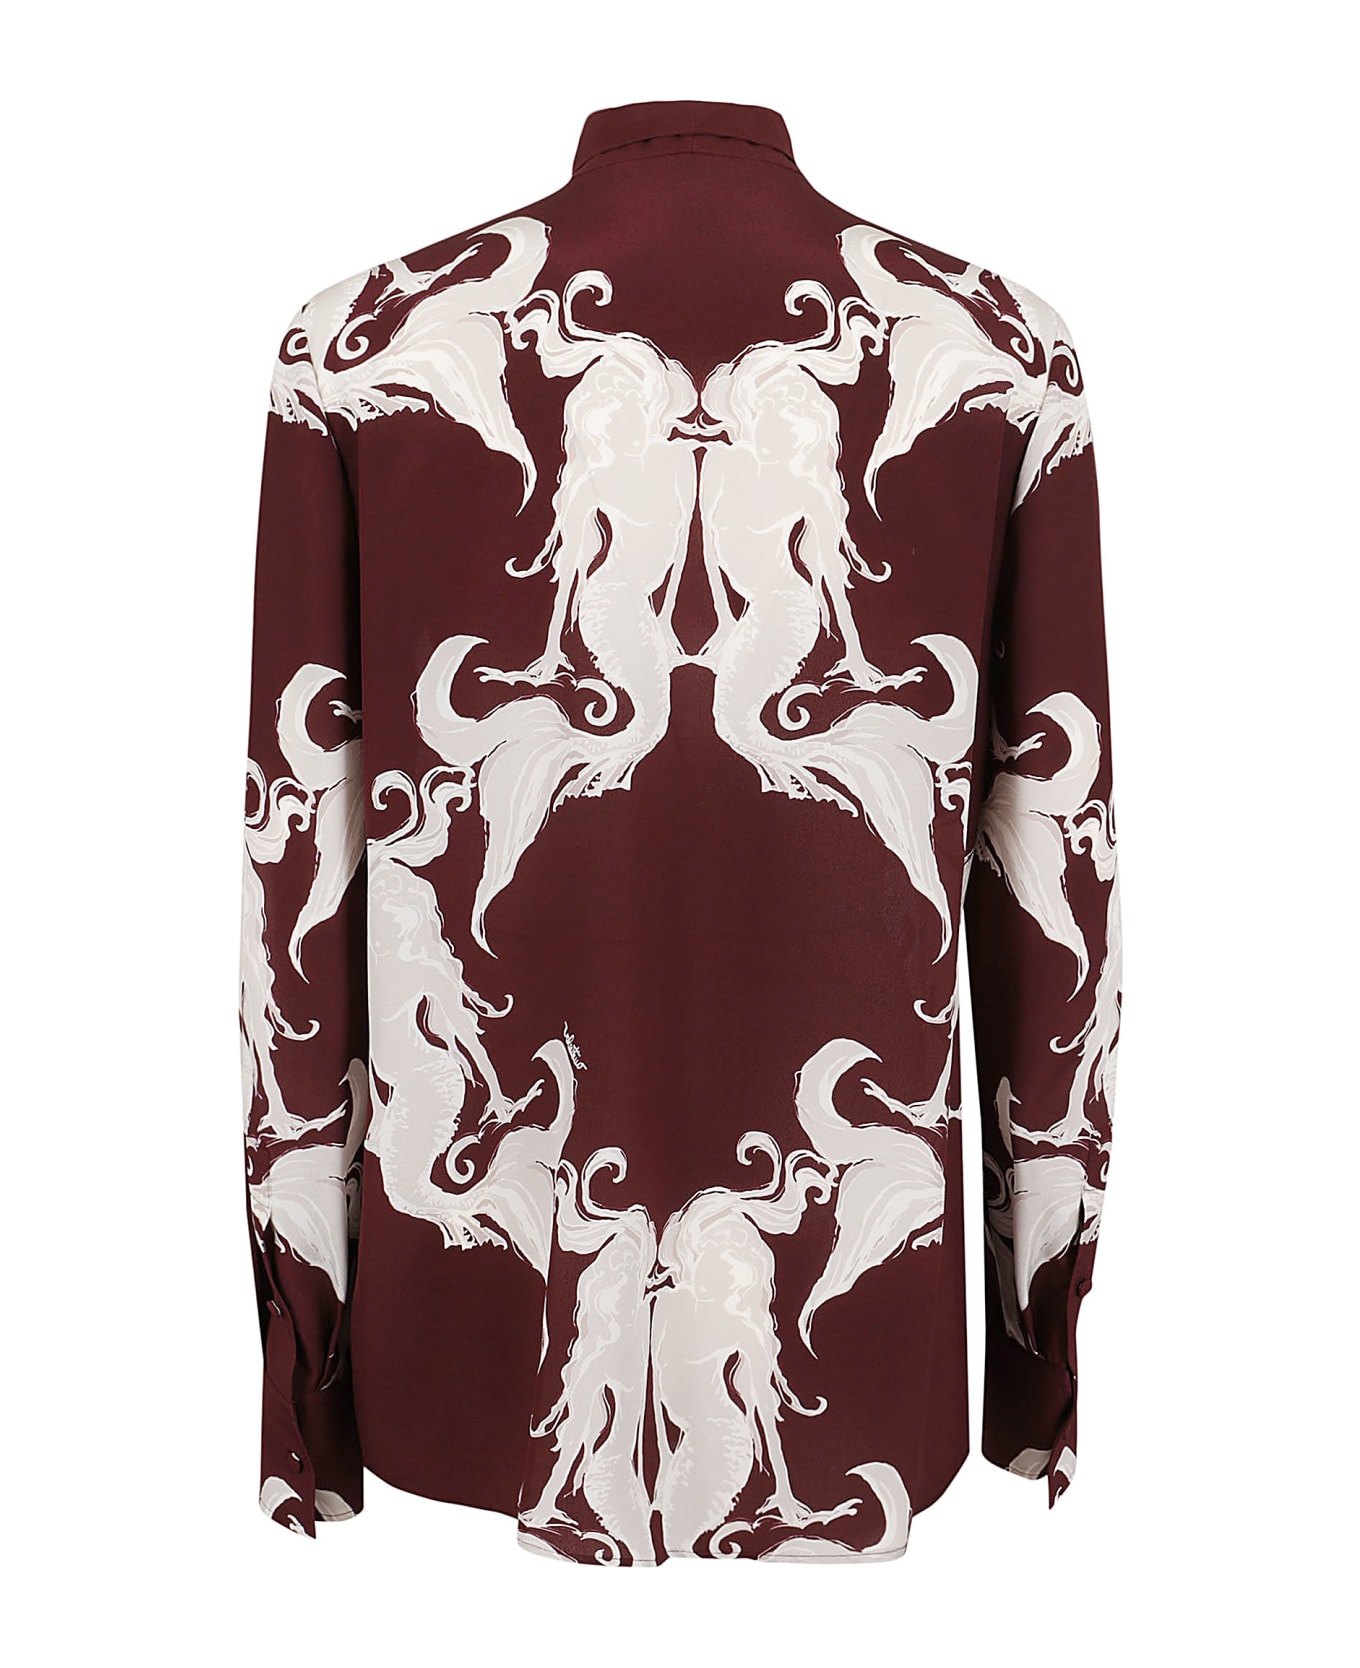 Valentino Garavani Shirt | Pattern | Crepe De Chine Metamorphos Siren Small - Yus Amarone Perla